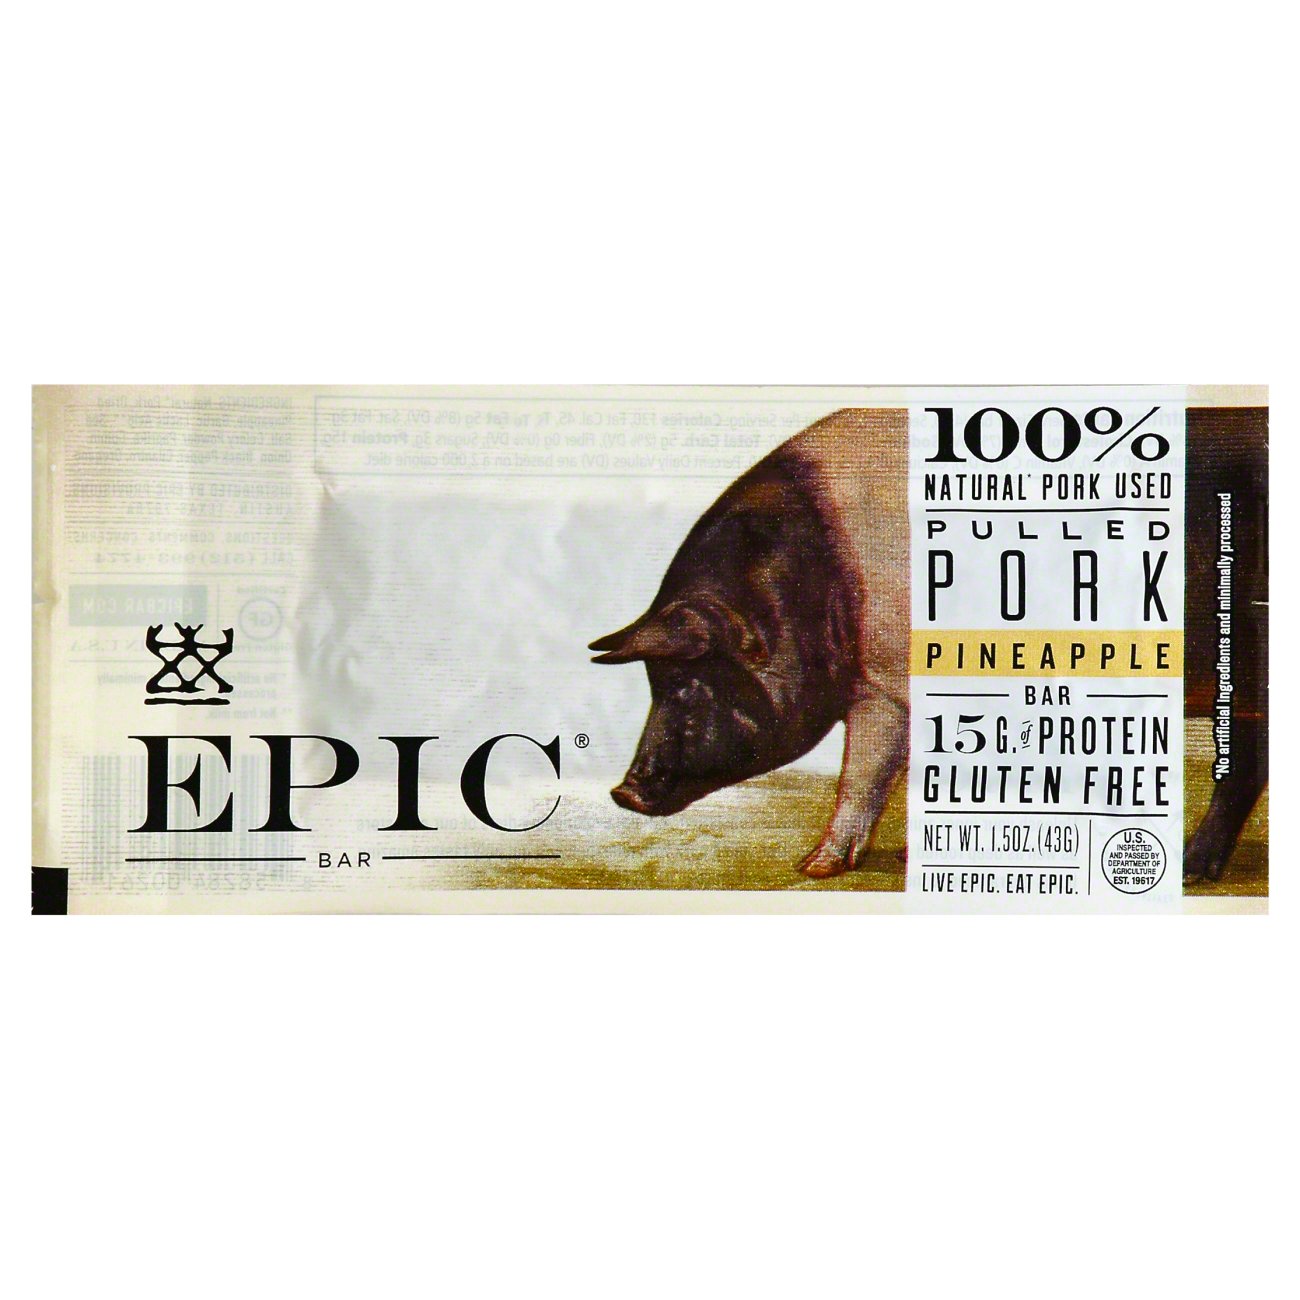 EPIC Pulled Pork Pineapple Bar - Shop Jerky at H-E-B